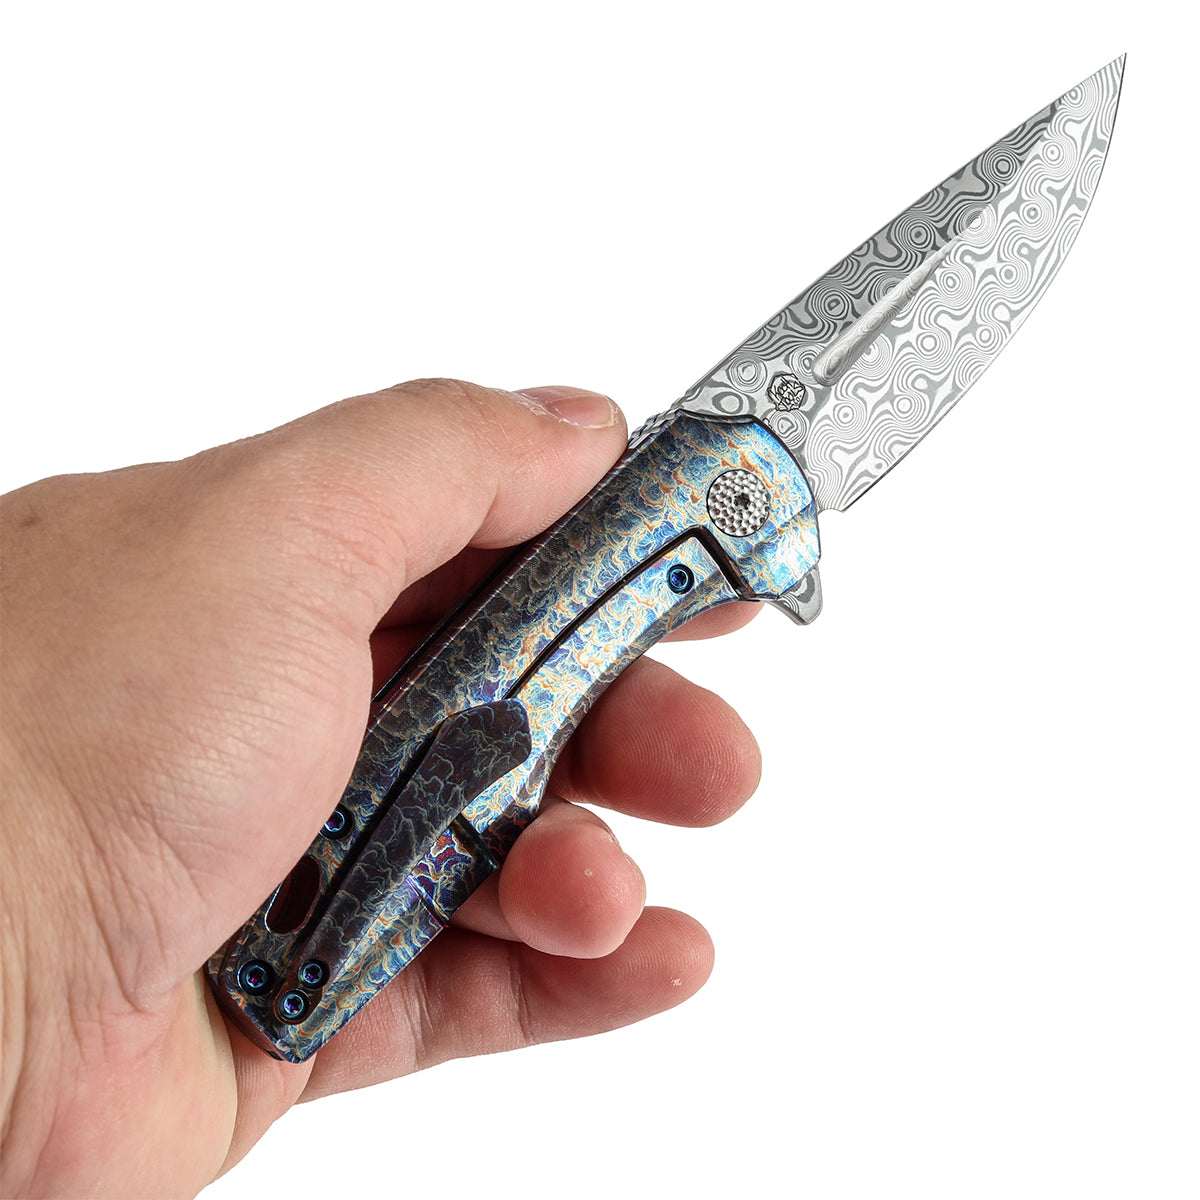 Kansept Cassowary K2065A3 鳍状刀 大马士革刀片 钛合金手柄 EDC 刀